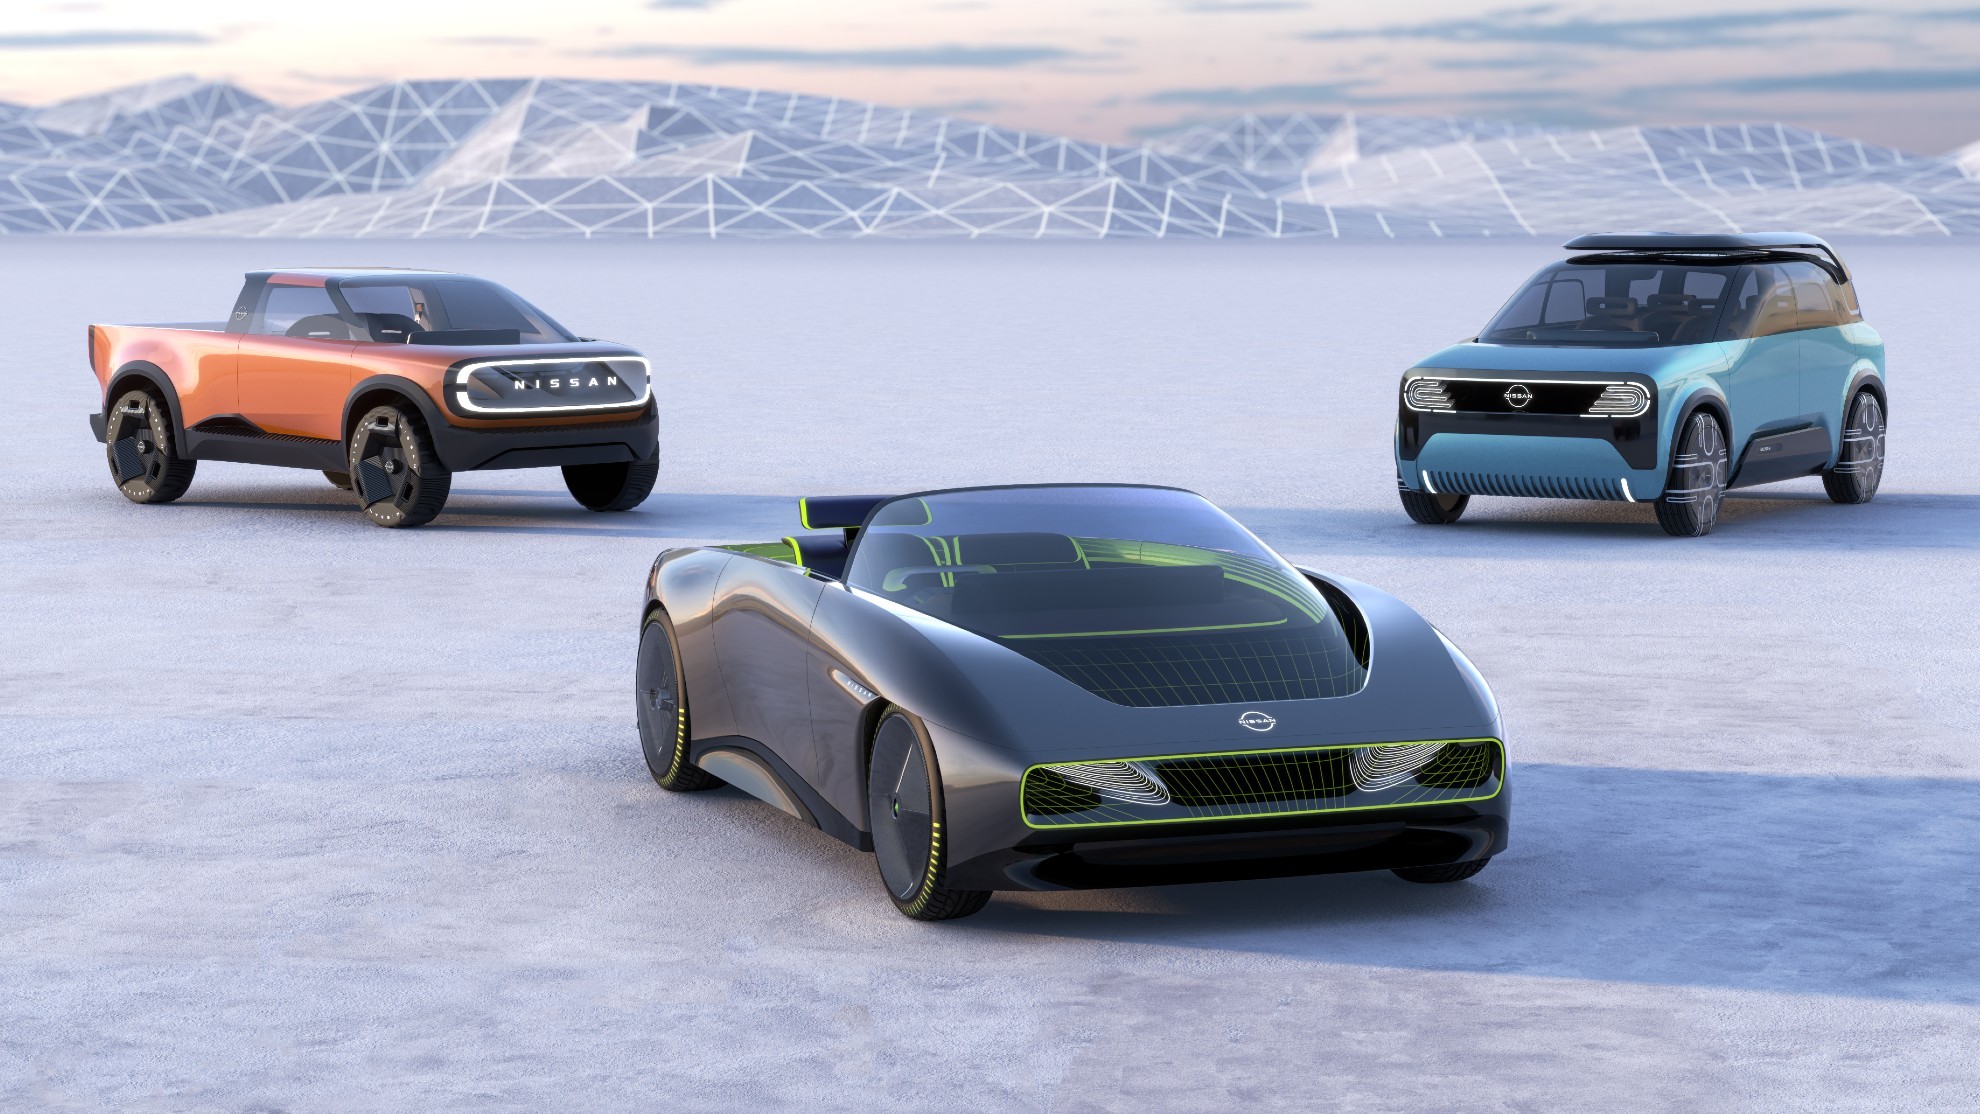 Nissan Ambition 2030 - Nissan Surf-Out - concept car - coches electricos - baterías solidas